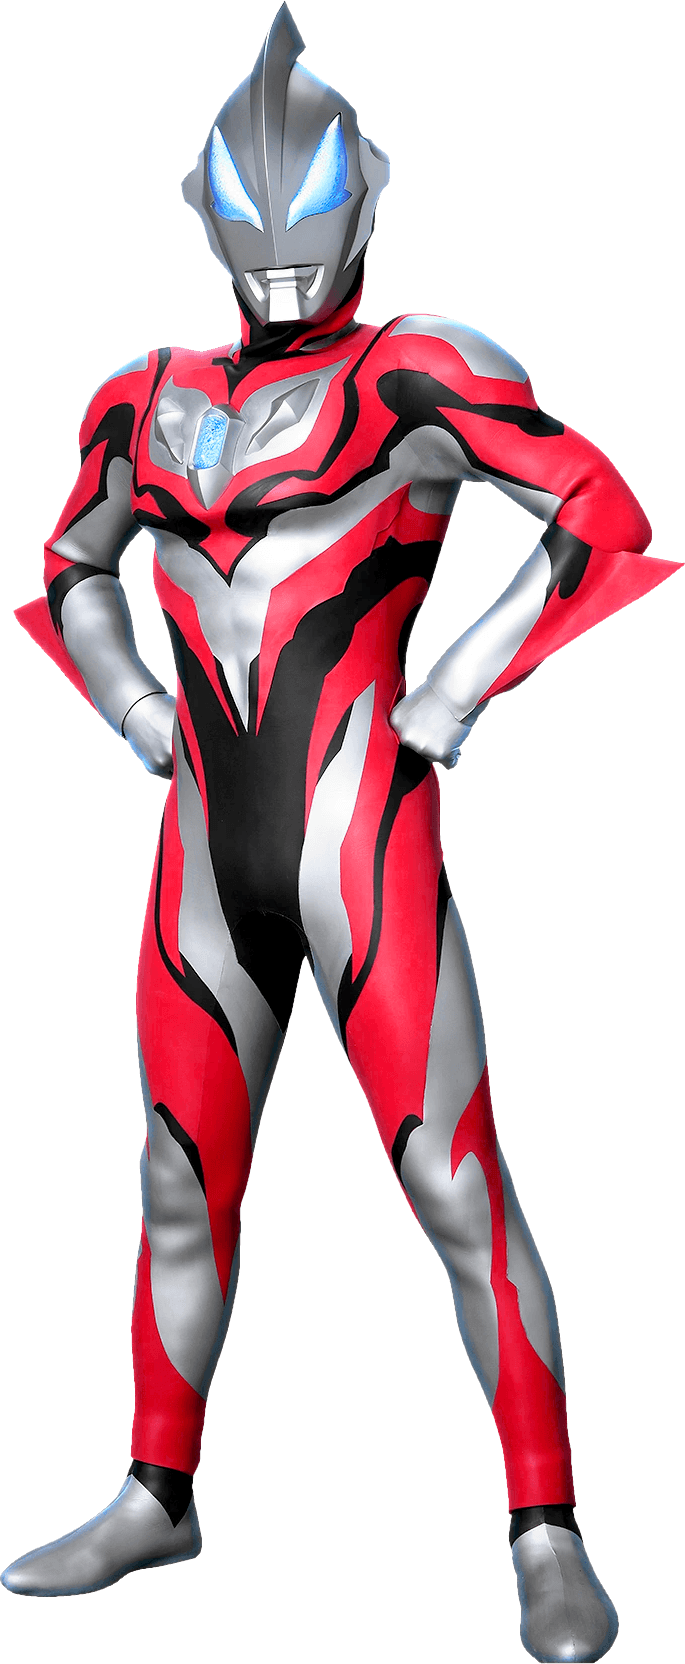 Ultraman Geed (character)